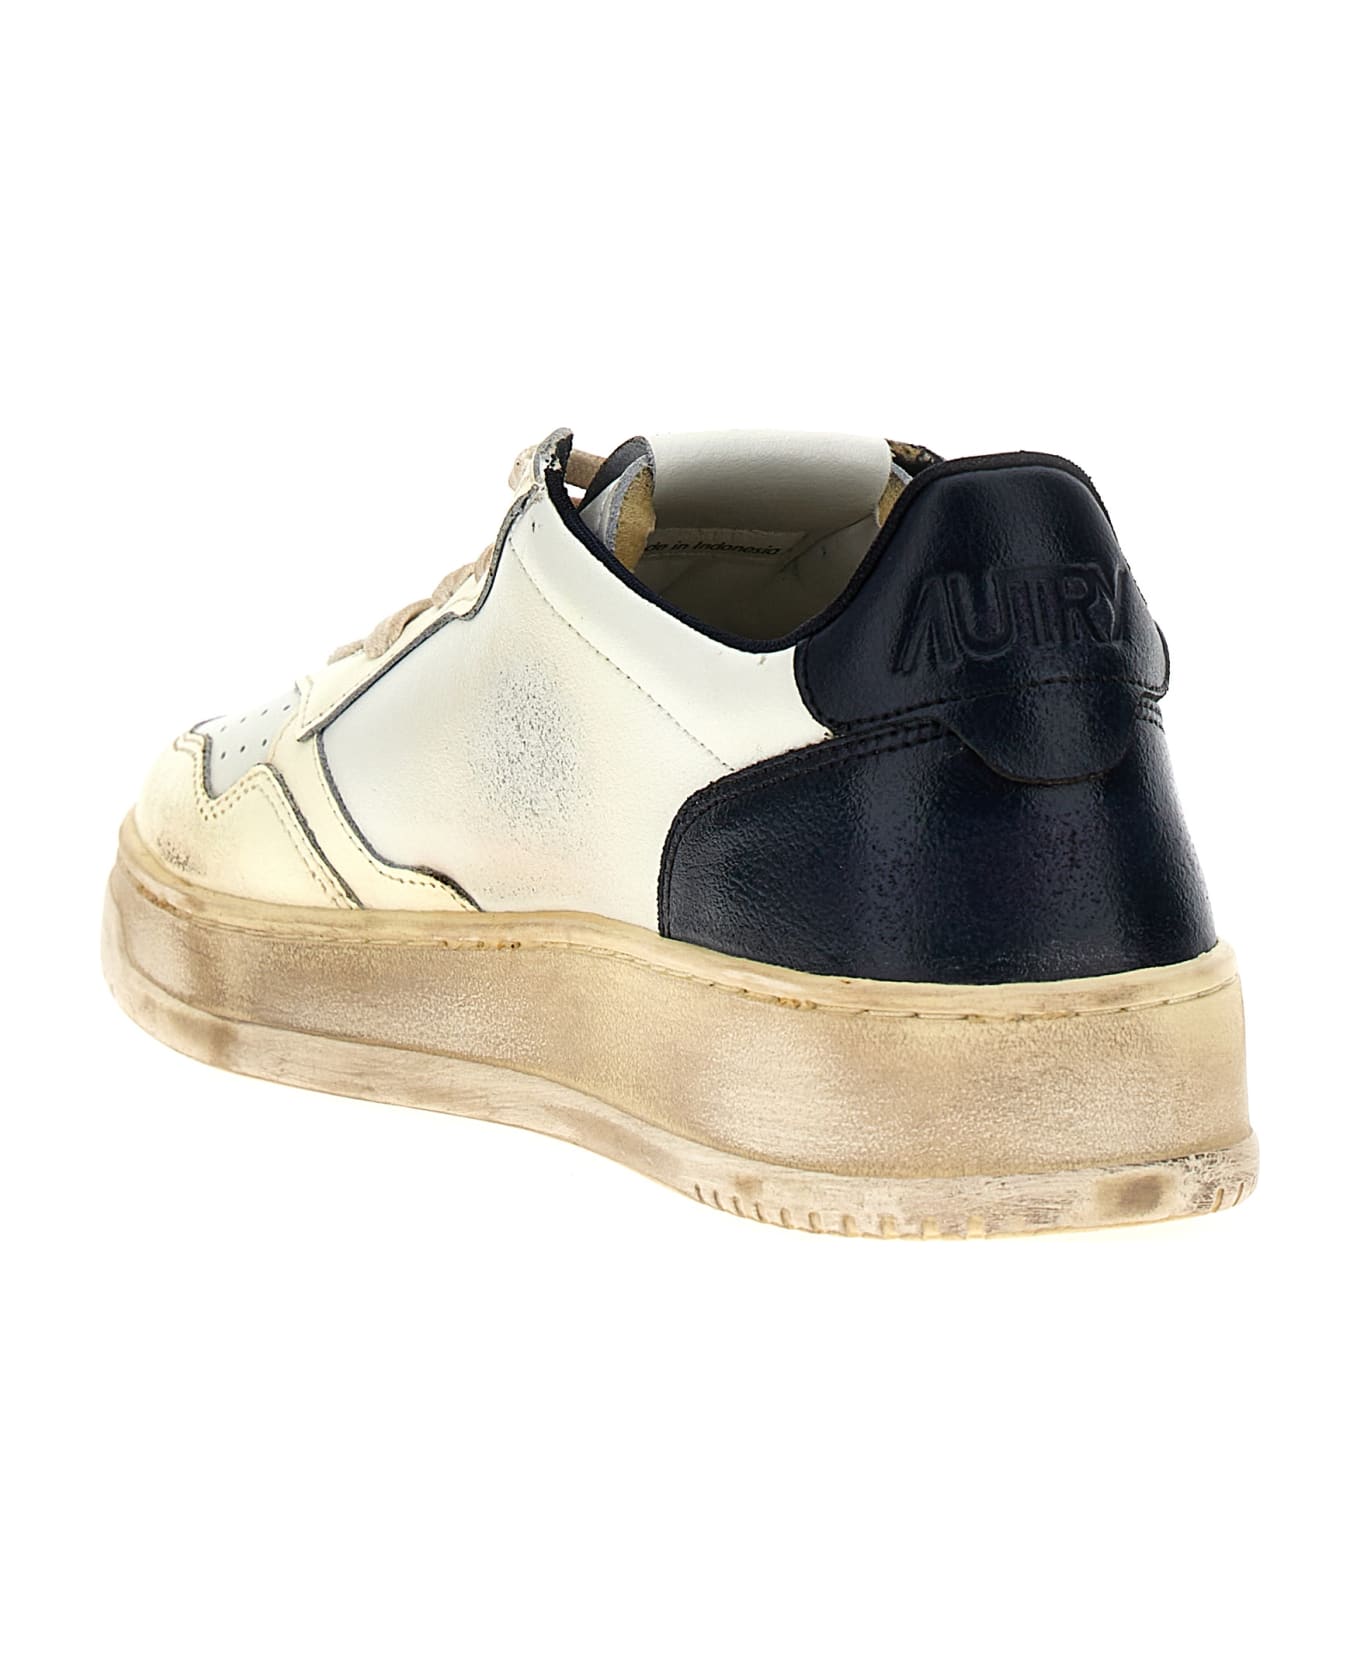 Autry Medalist Low Super Vintage Sneakers - White/Black スニーカー